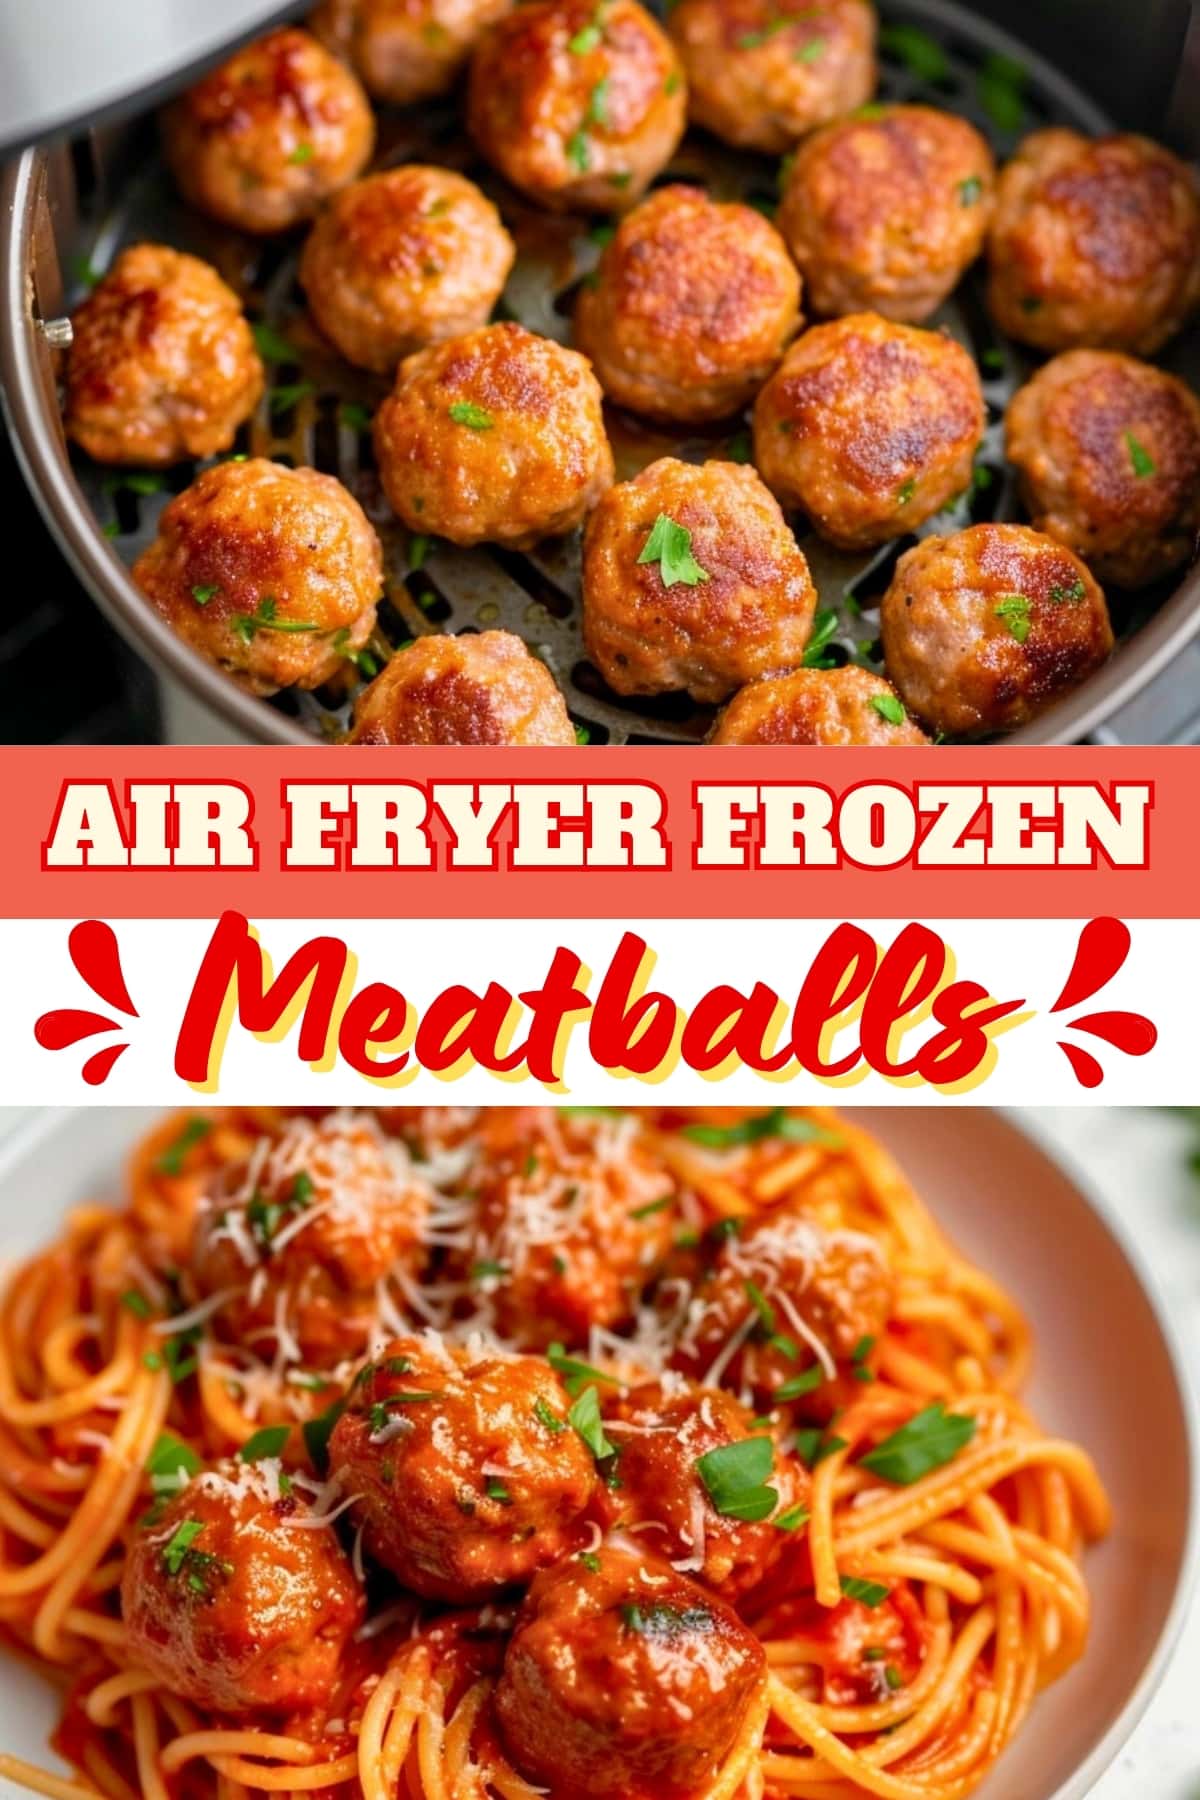 Air fryer frozen meatballs